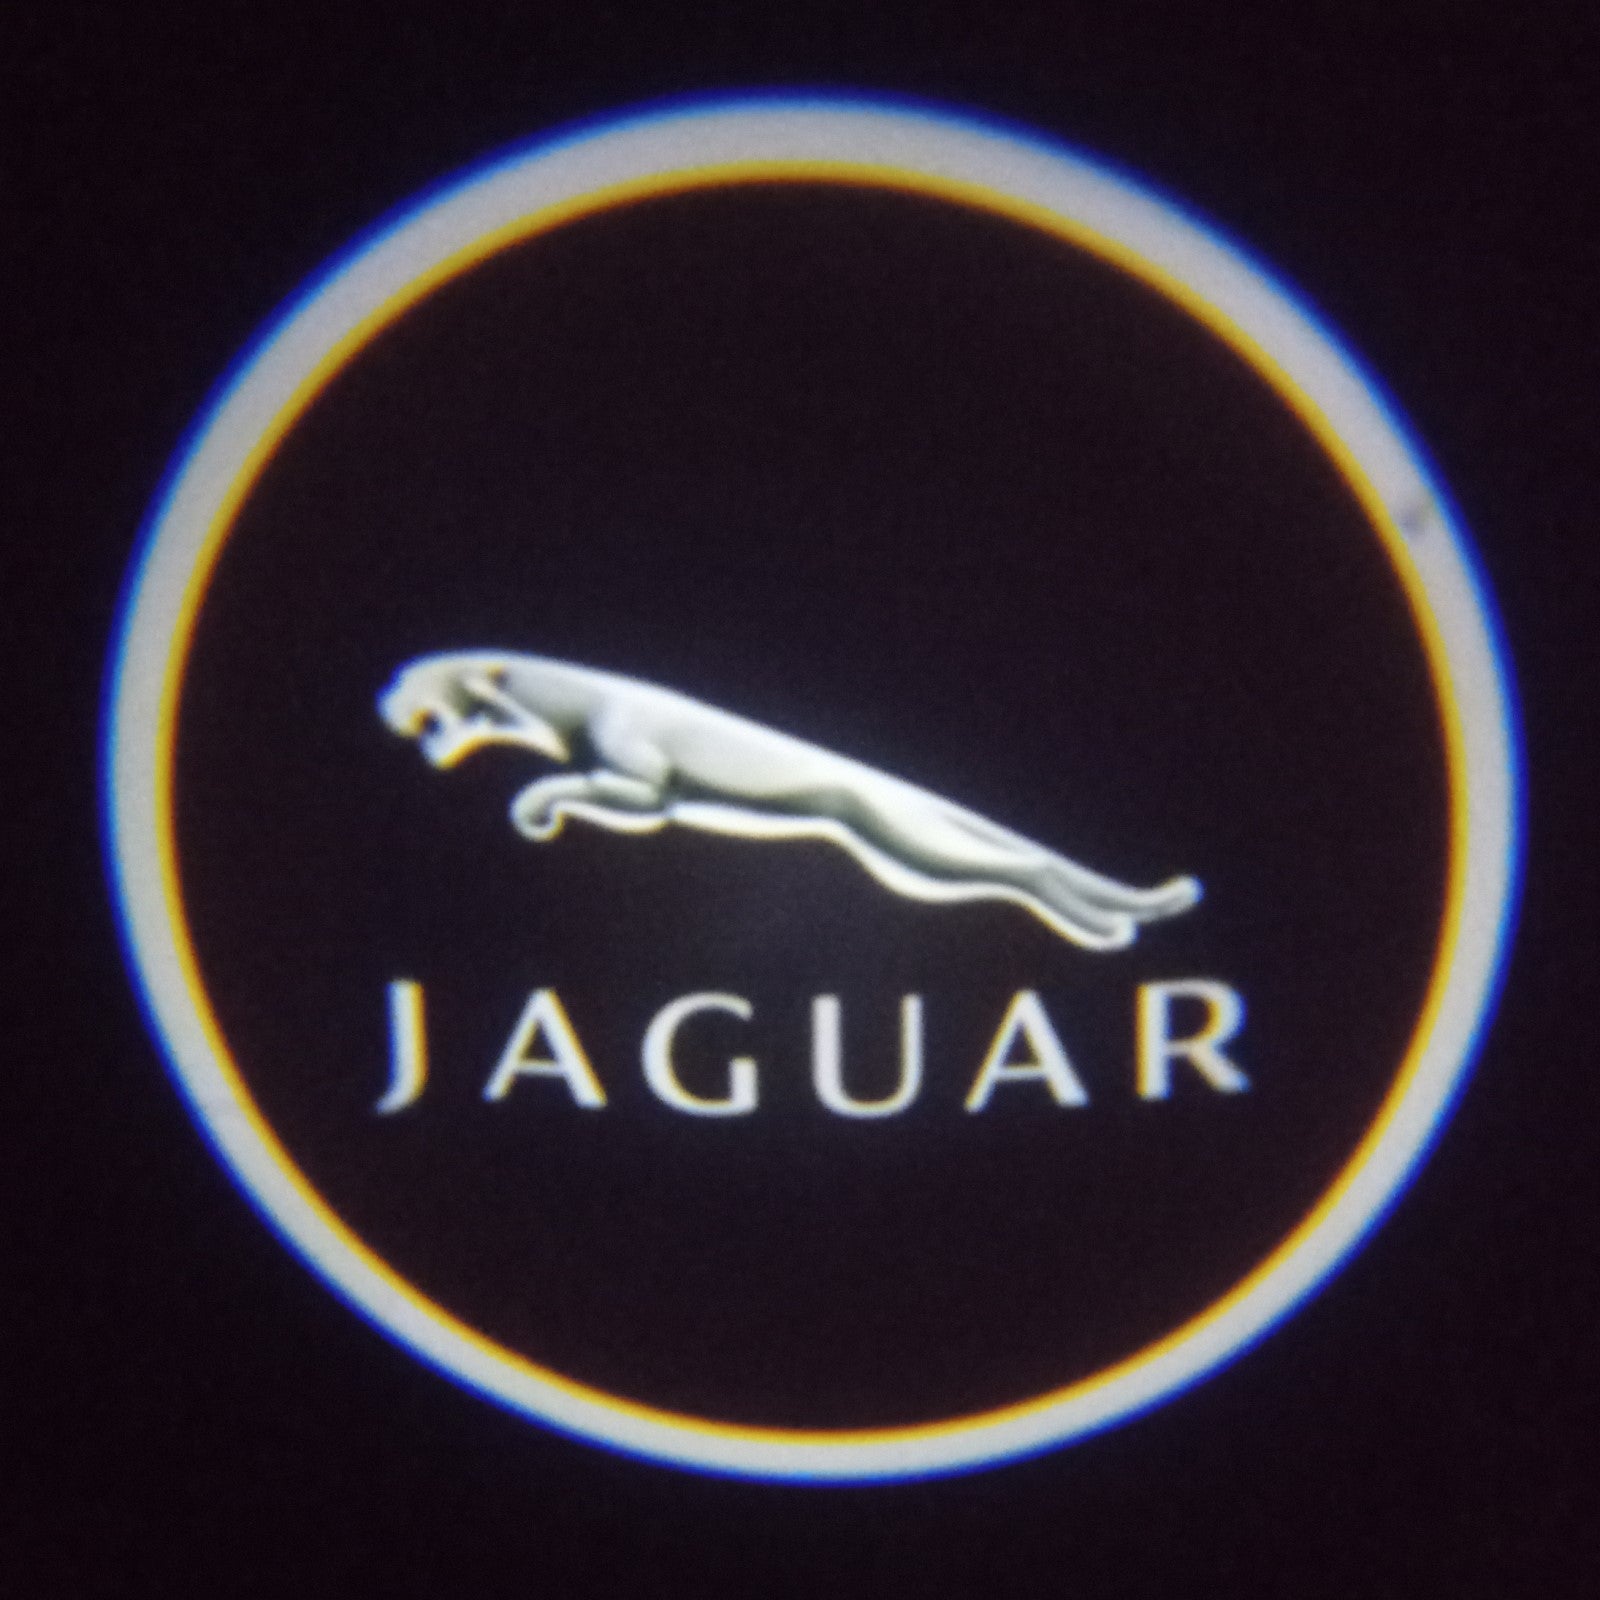 Luzes Cortesia com Logotipo marca Jaguar